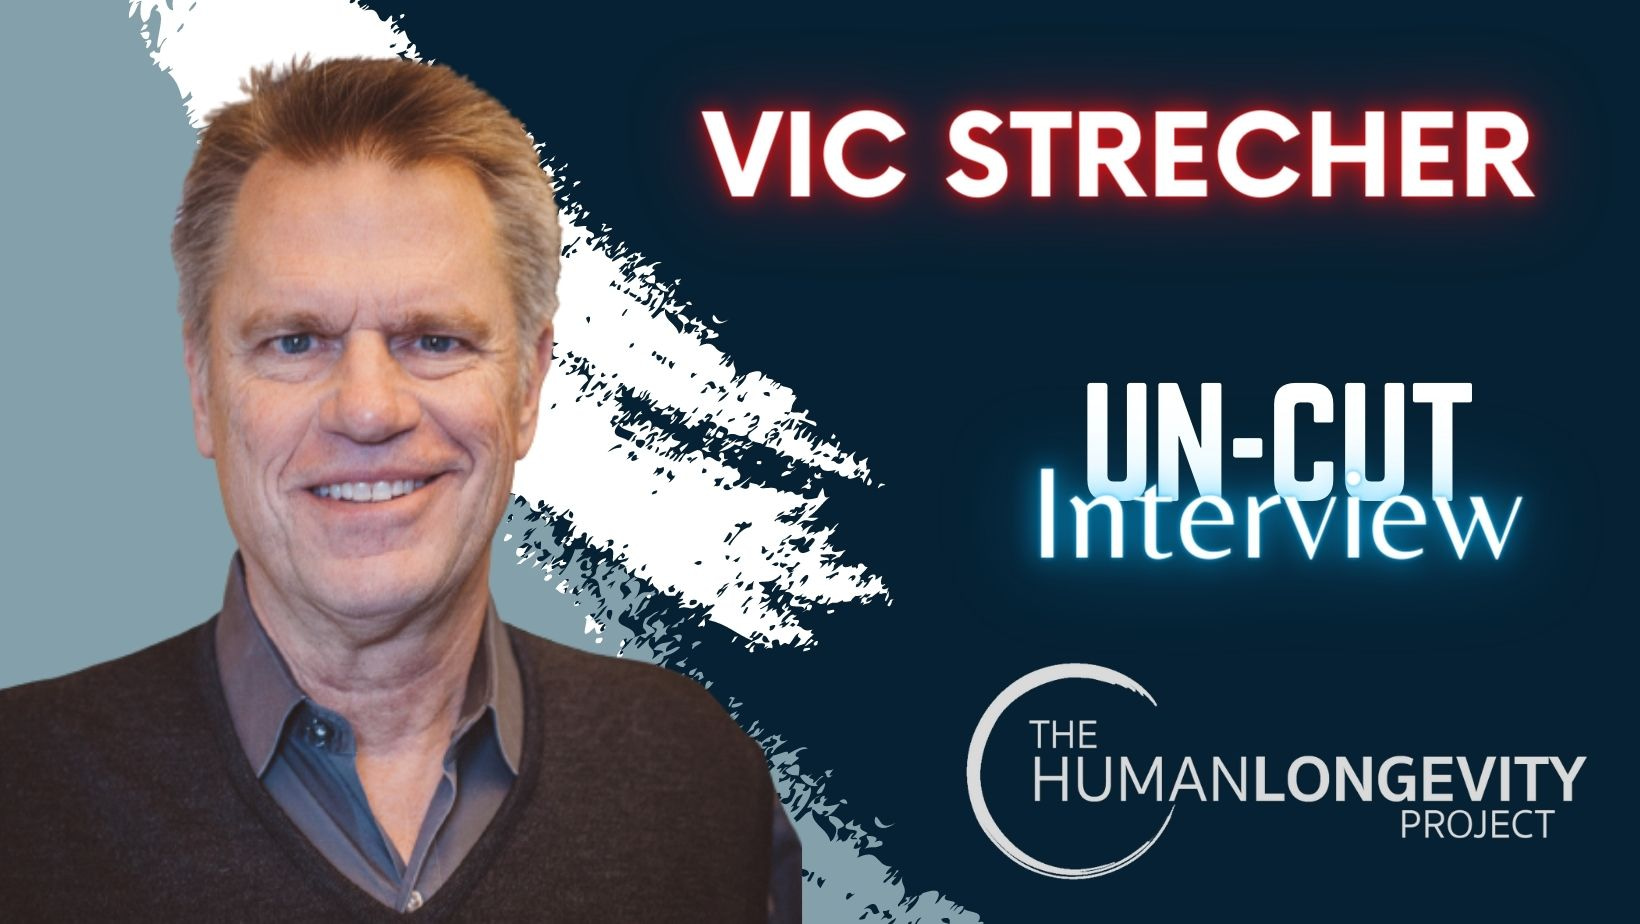 Human Longevity Project Uncut Interview With Dr. Vic Strecher